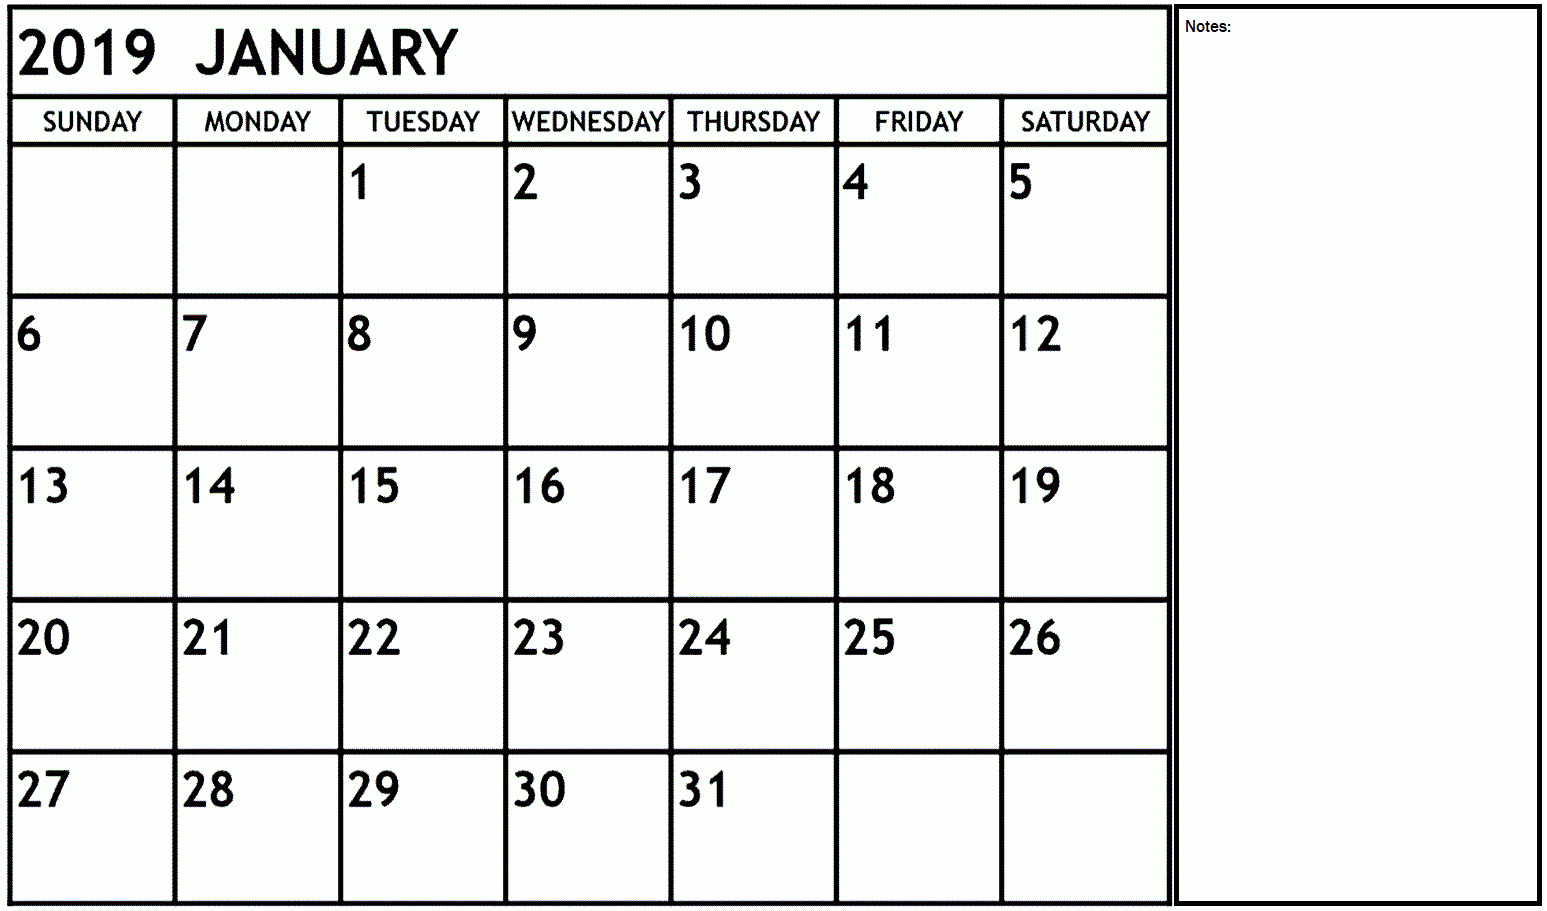 January 2019 Calendar With Notes #printable #calendar